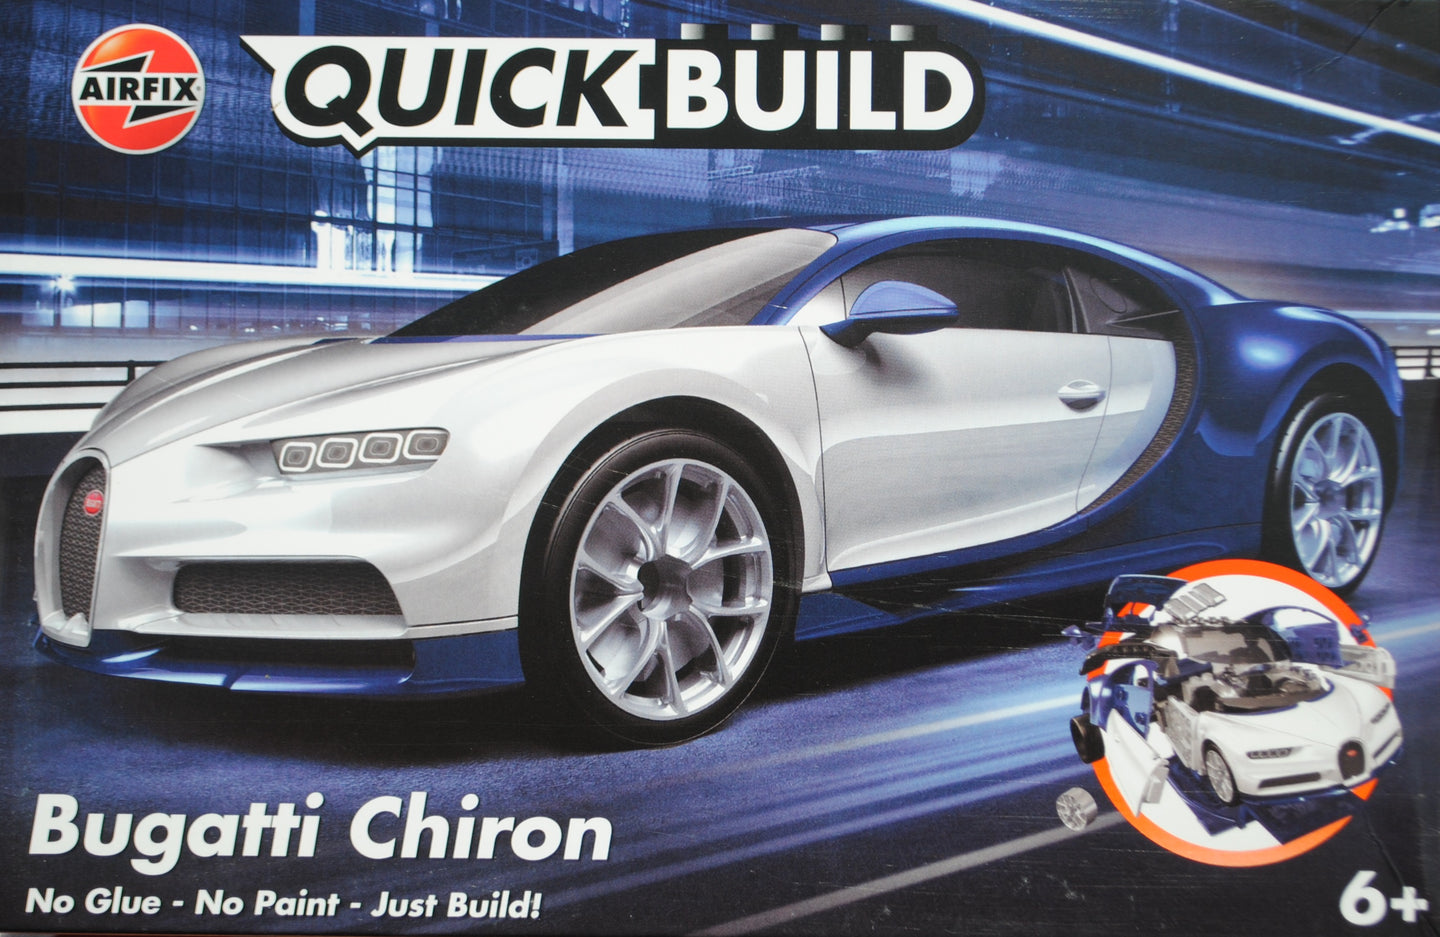 Airfix Quickbuild Snap Bugatti Chiron J6044